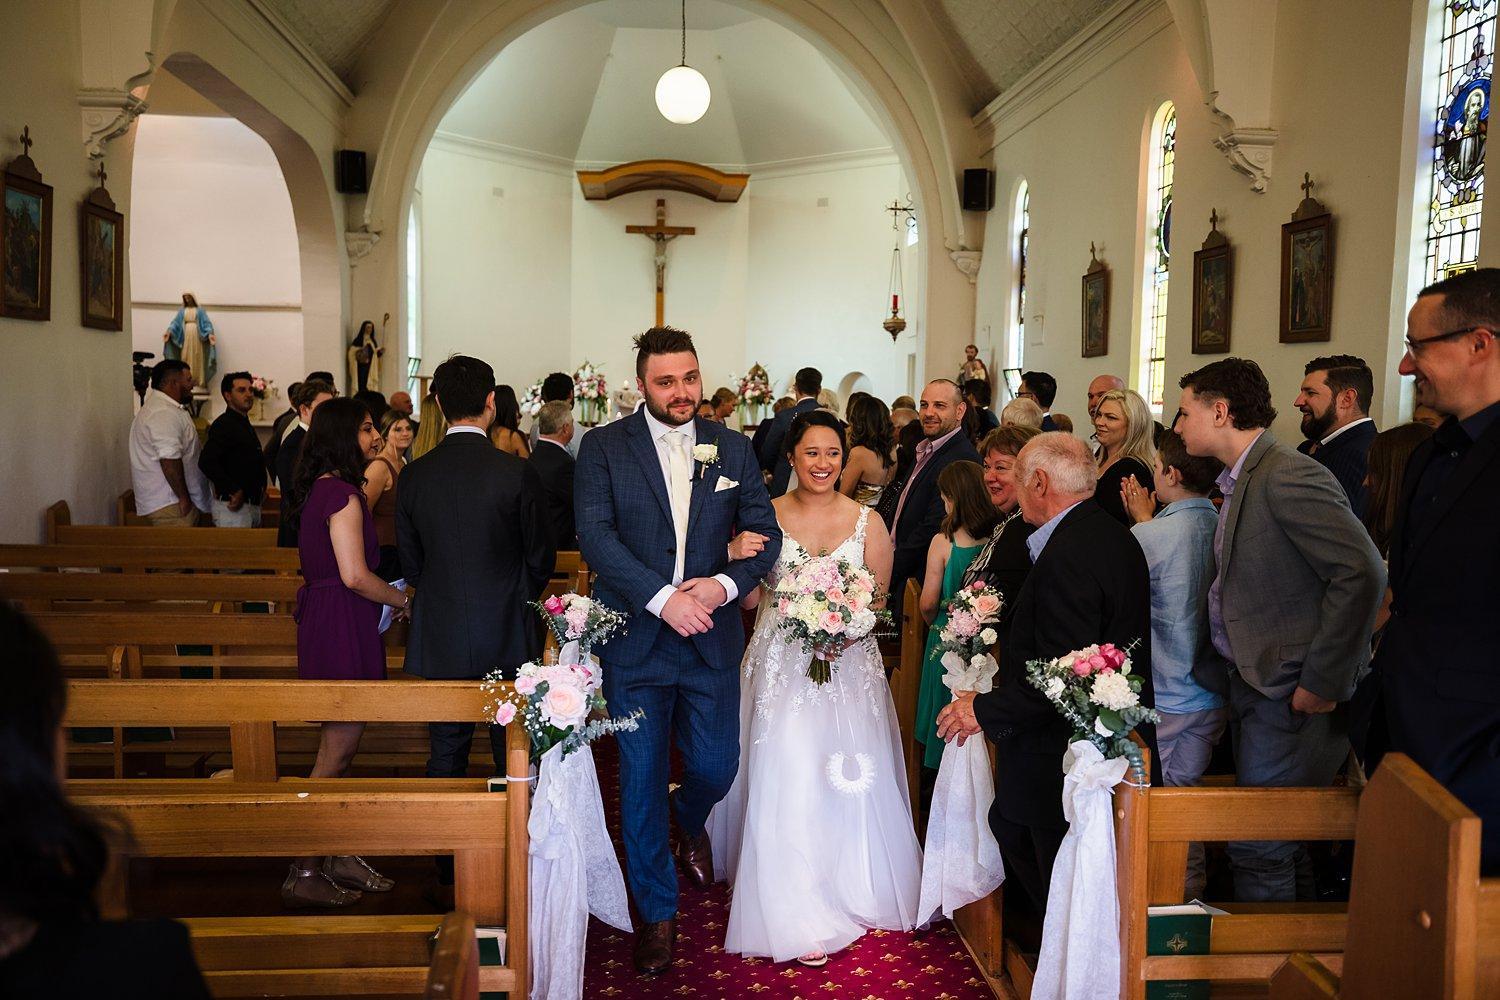 married couple walk through the church hand in hand